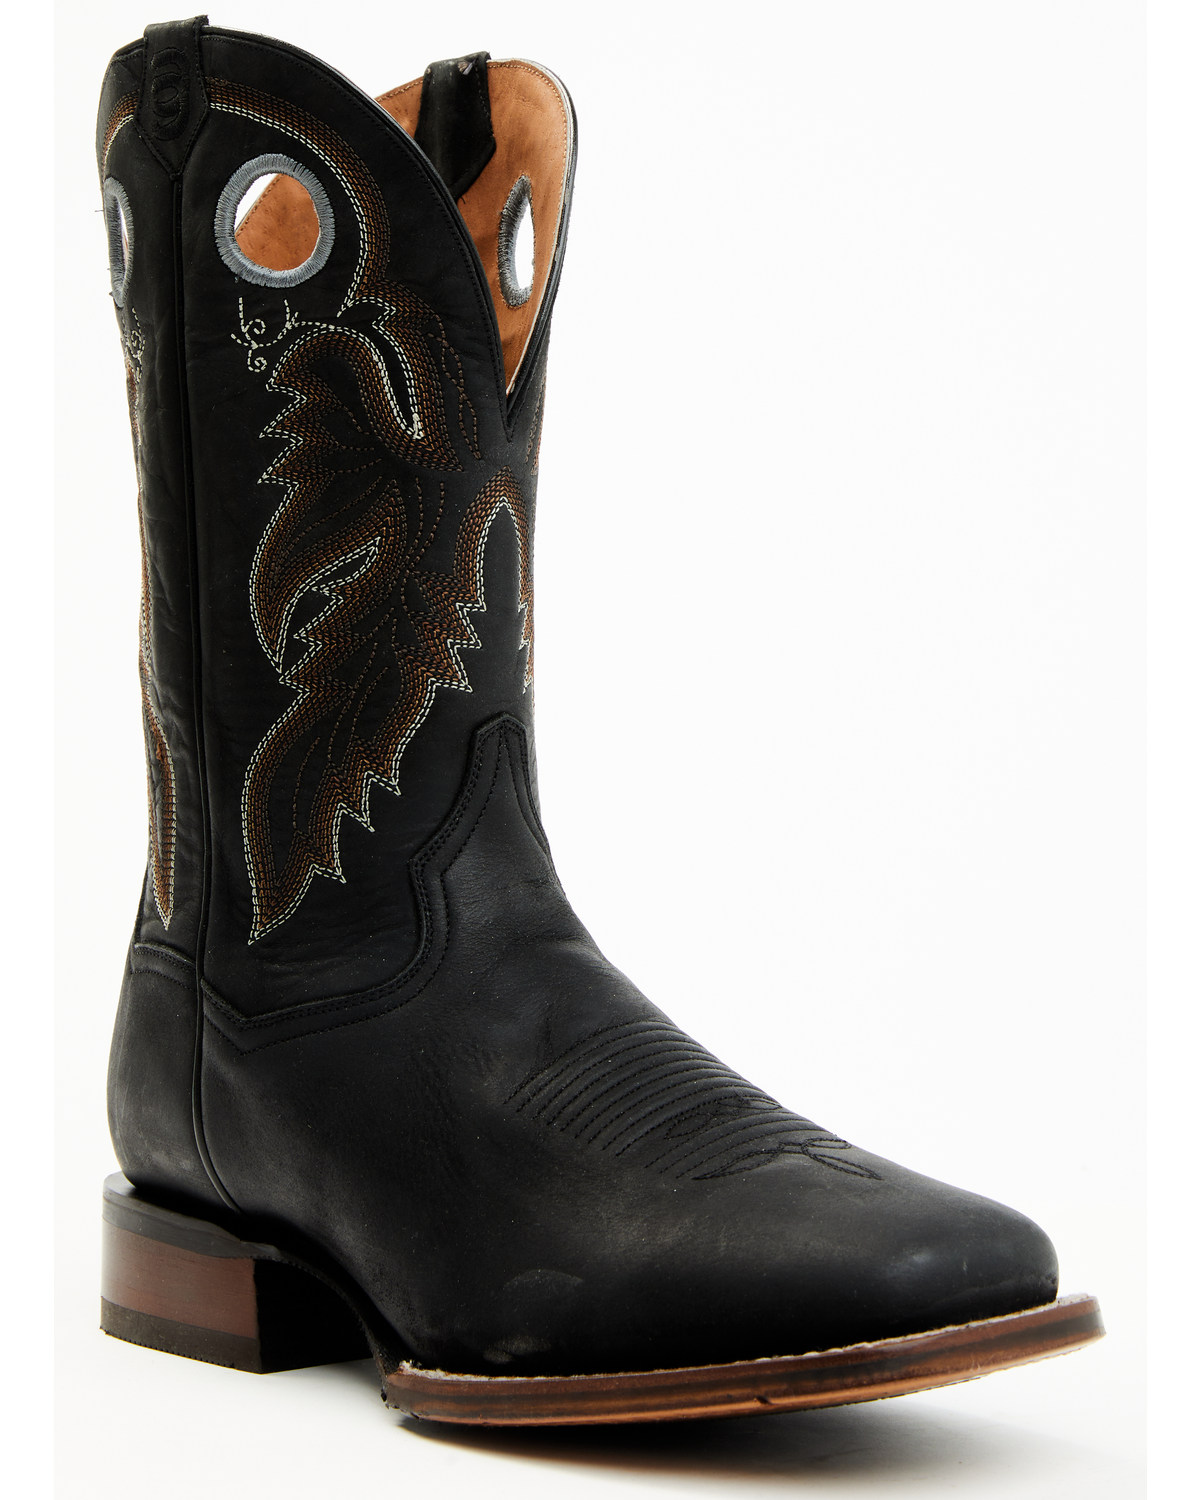 Dan Post Men's 12" Leon Cowboy Certified Western Performance Boots - Broad Square Toe